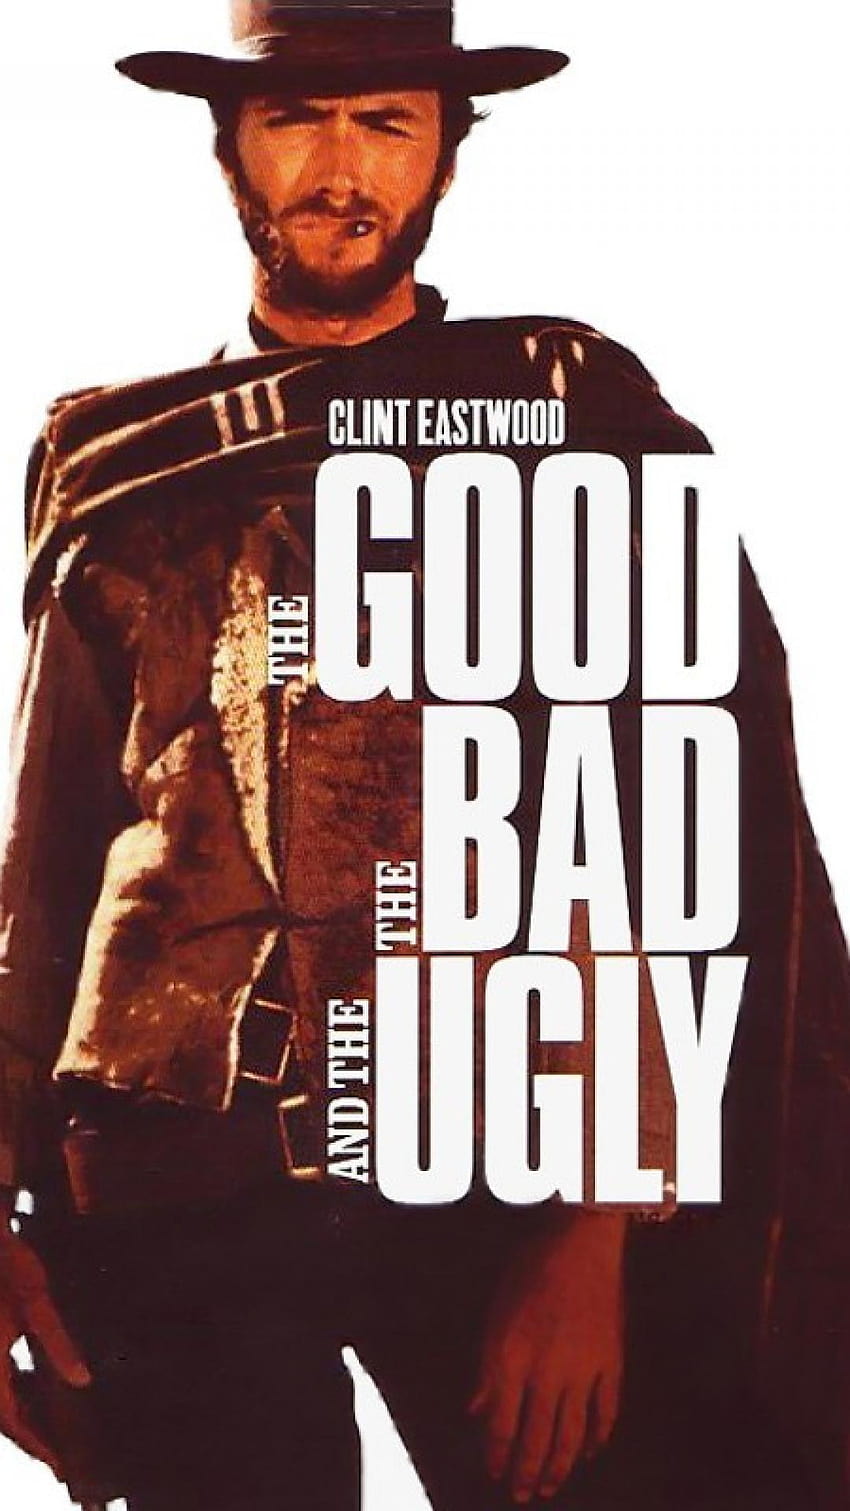 Wallpaper figure Western Clint Eastwood Clint Eastwood images for  desktop section мужчины  download